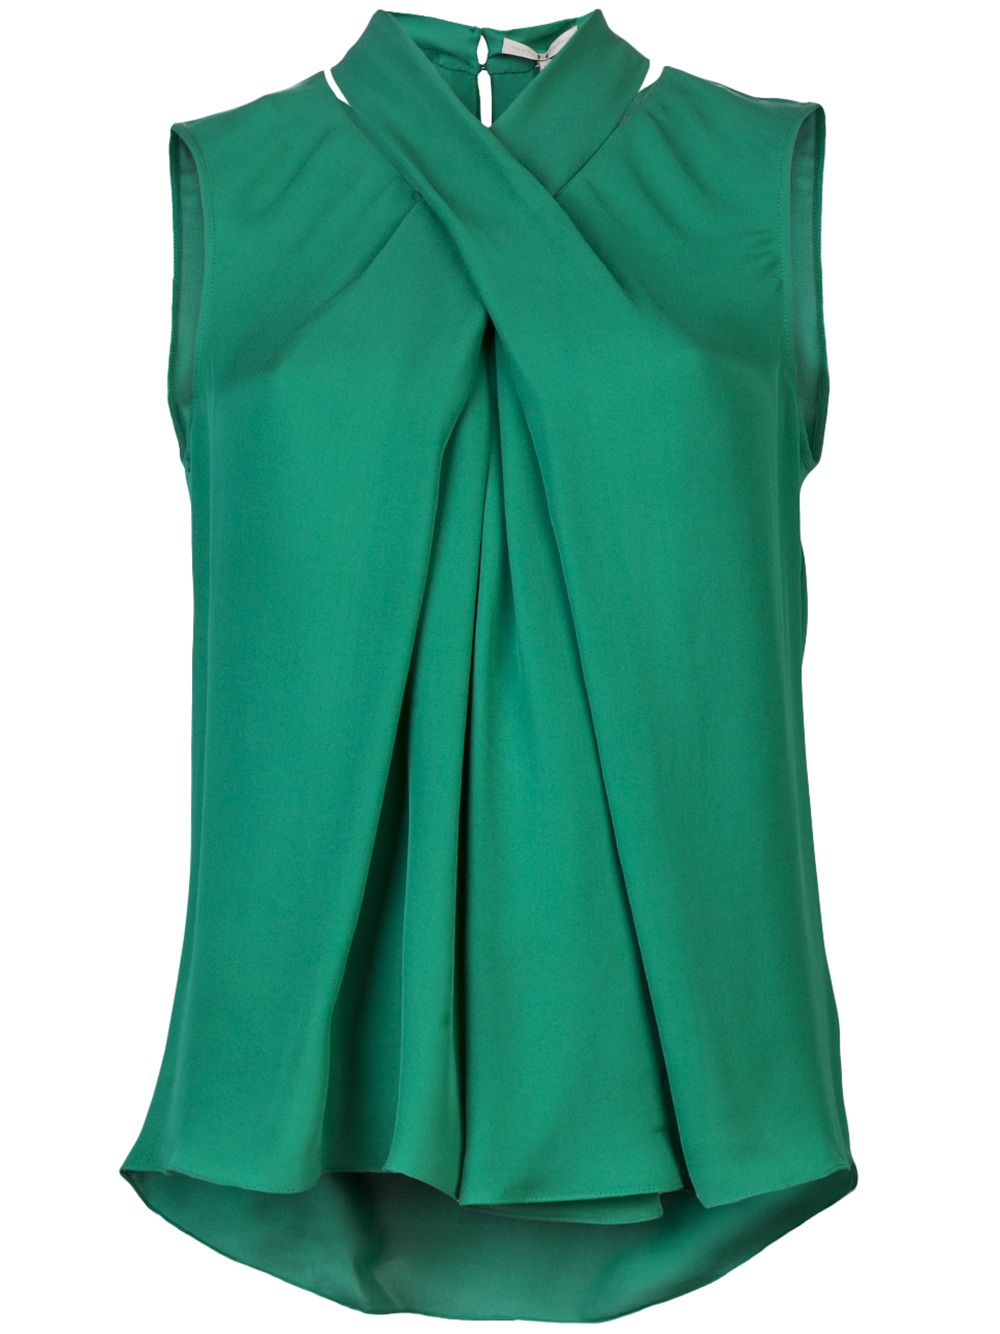 Halston Sleeveless Top in Emerald (Green) - Lyst